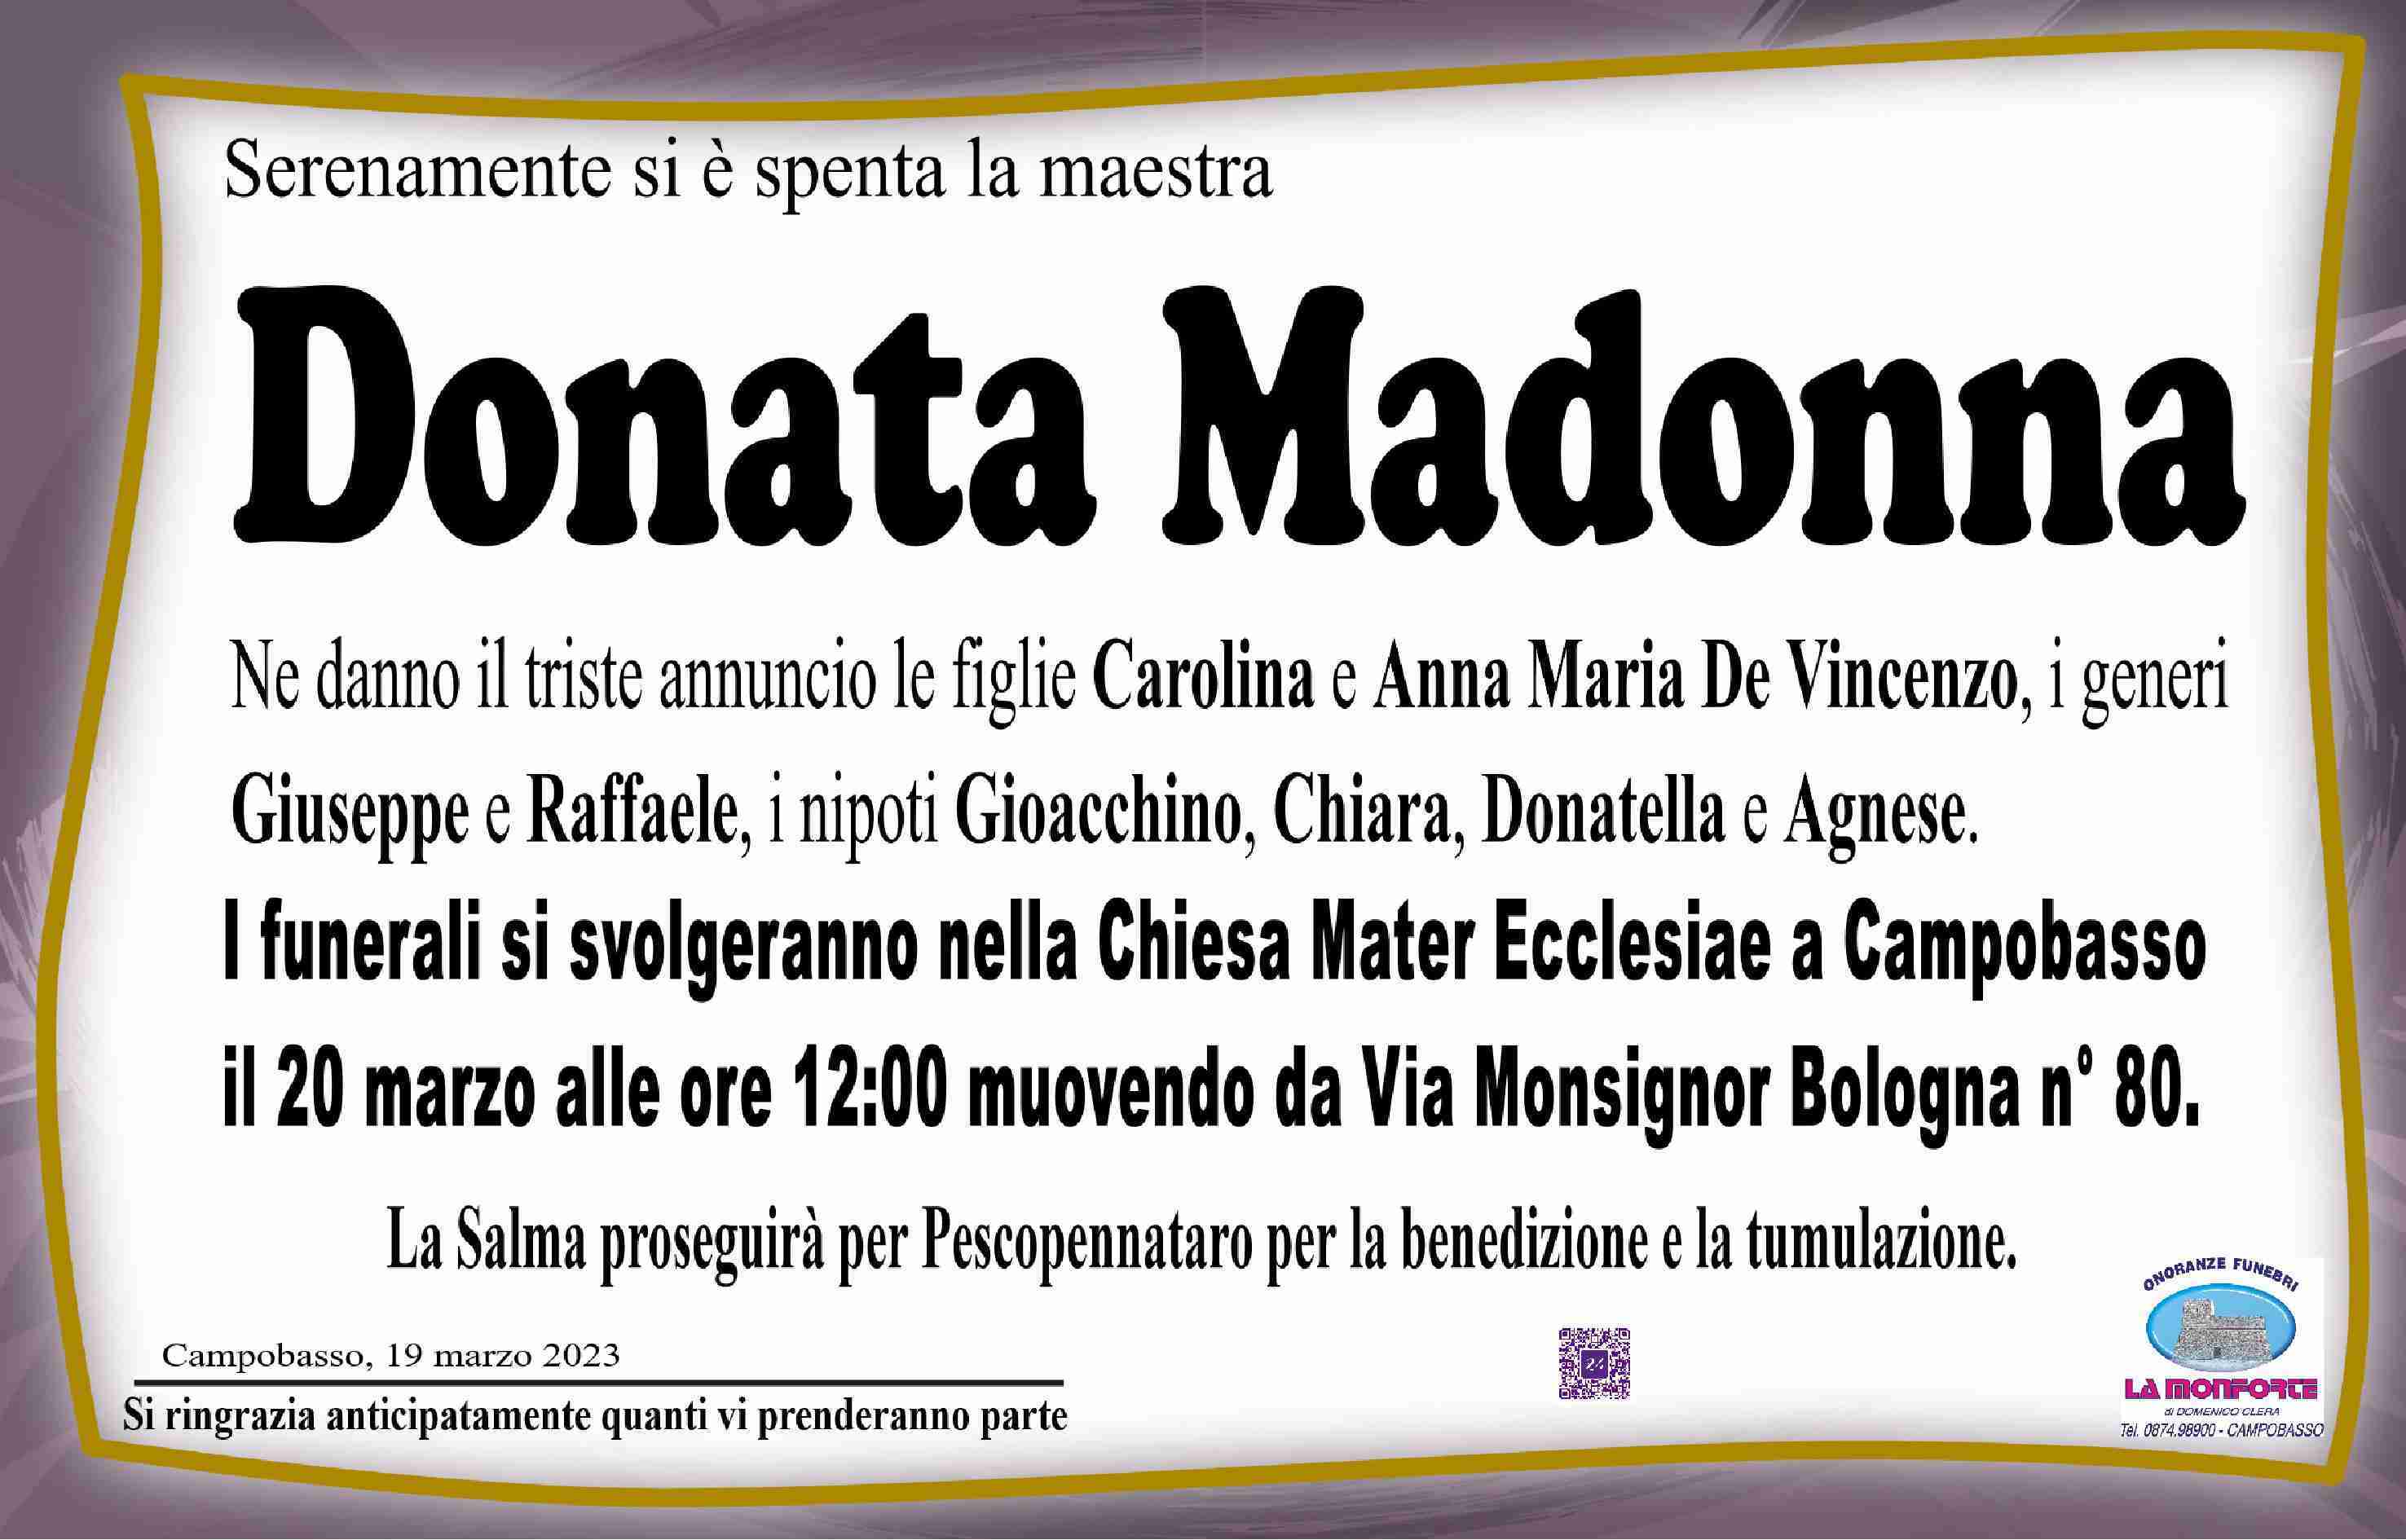 Donata Madonna